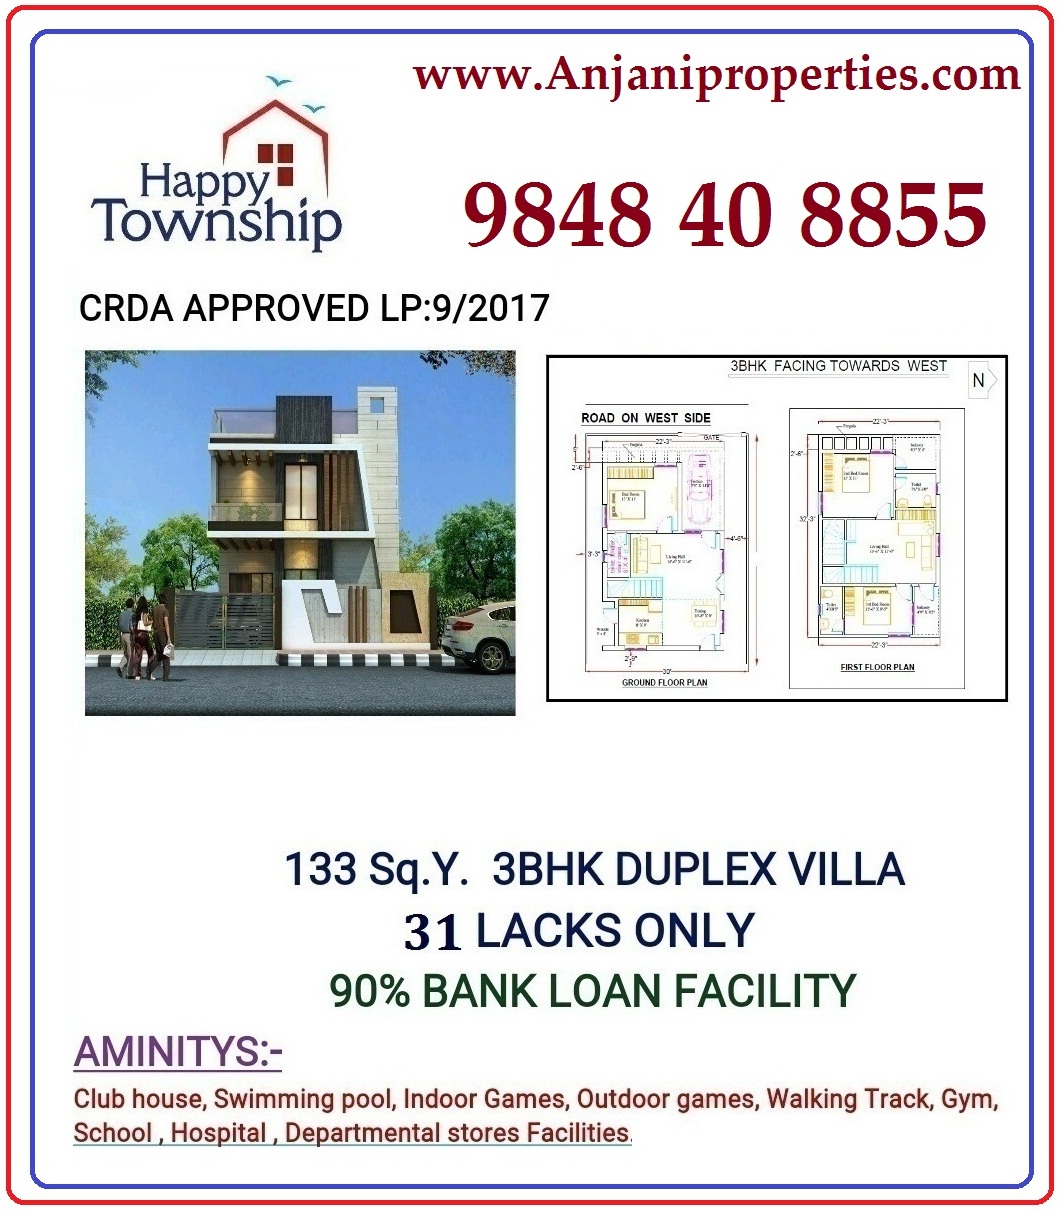 3BHK Duplex Villa for 31 Lacks only. A Well Gated Community suituated near Kanchikacherala, Vijayawada.Real EstateLand Plot For SaleNoidaNoida Sector 10